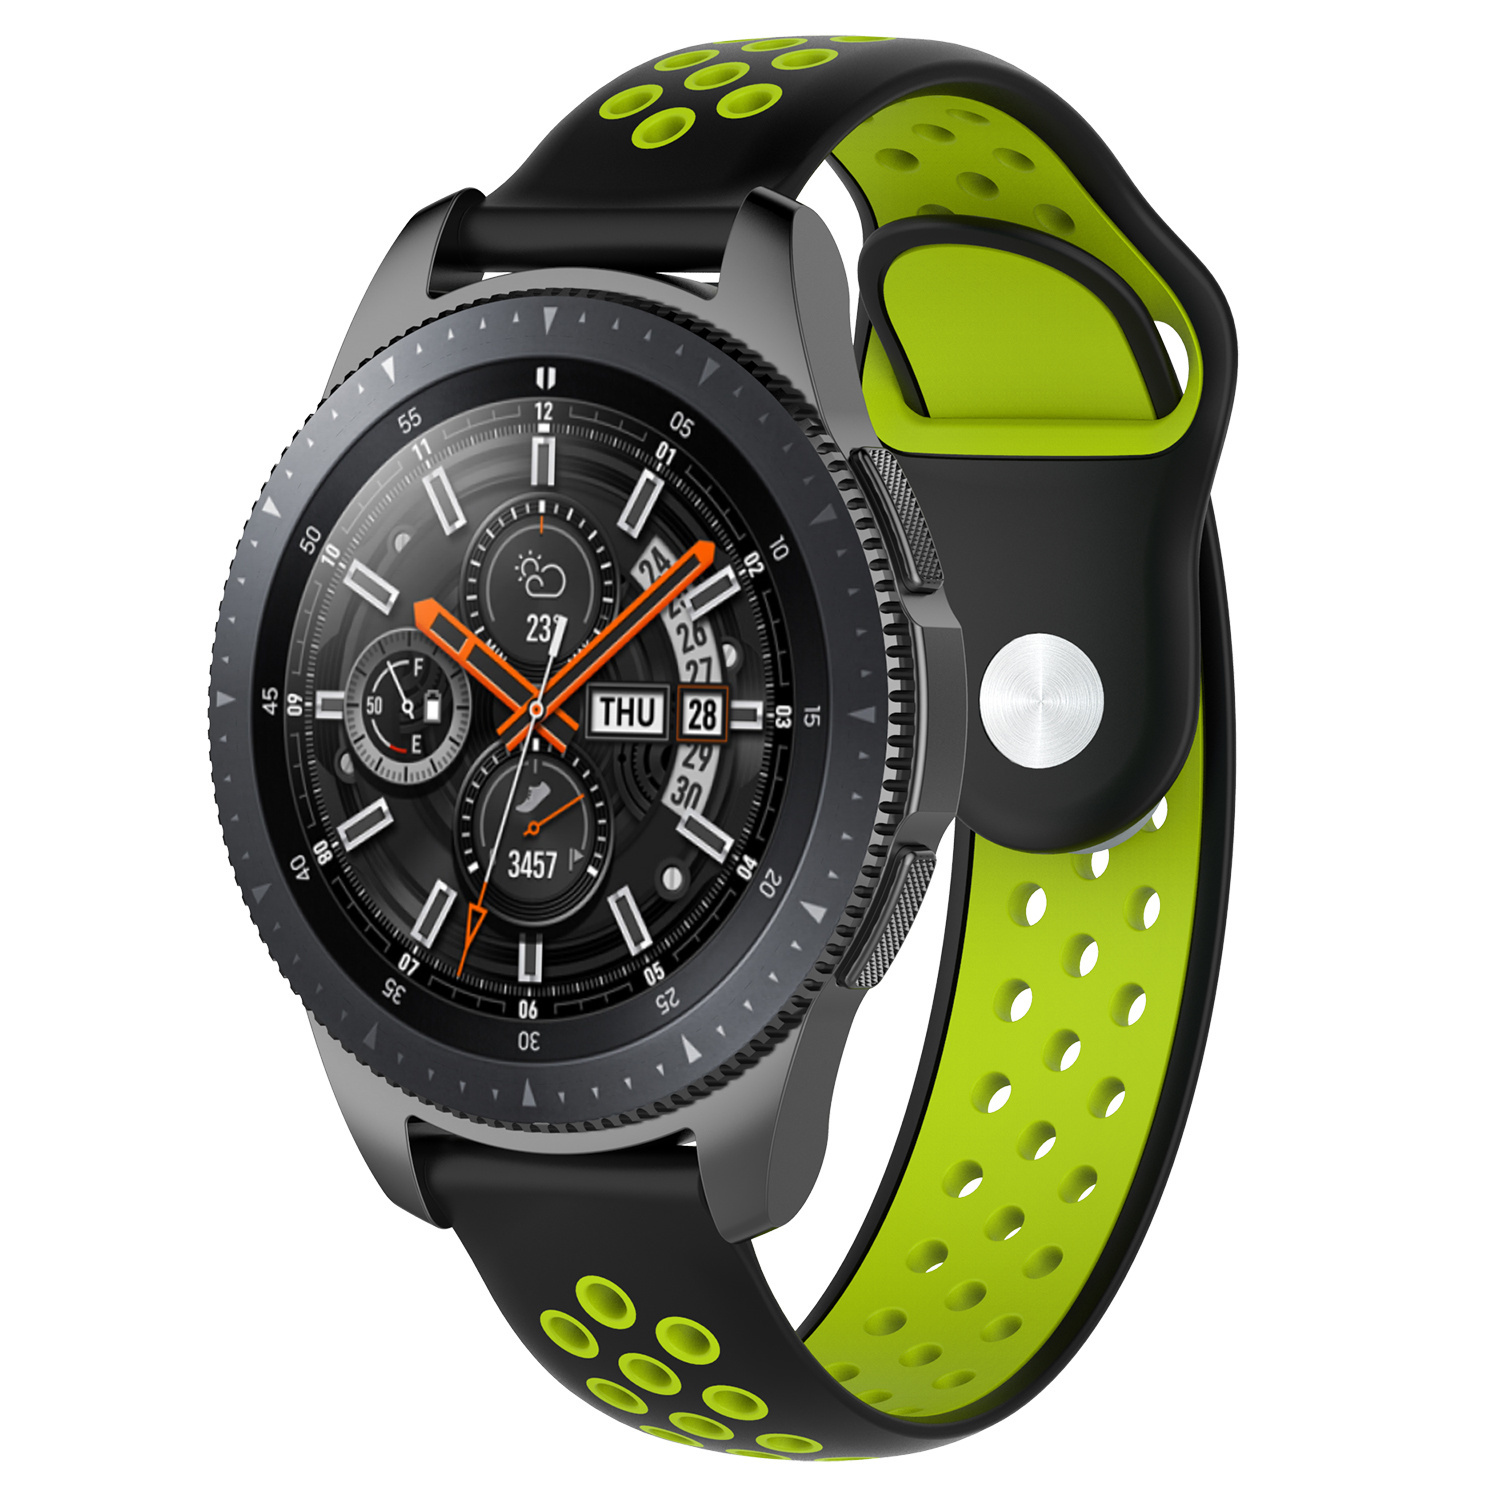 Samsung Galaxy Watch dupla sport szalag - fekete zöld